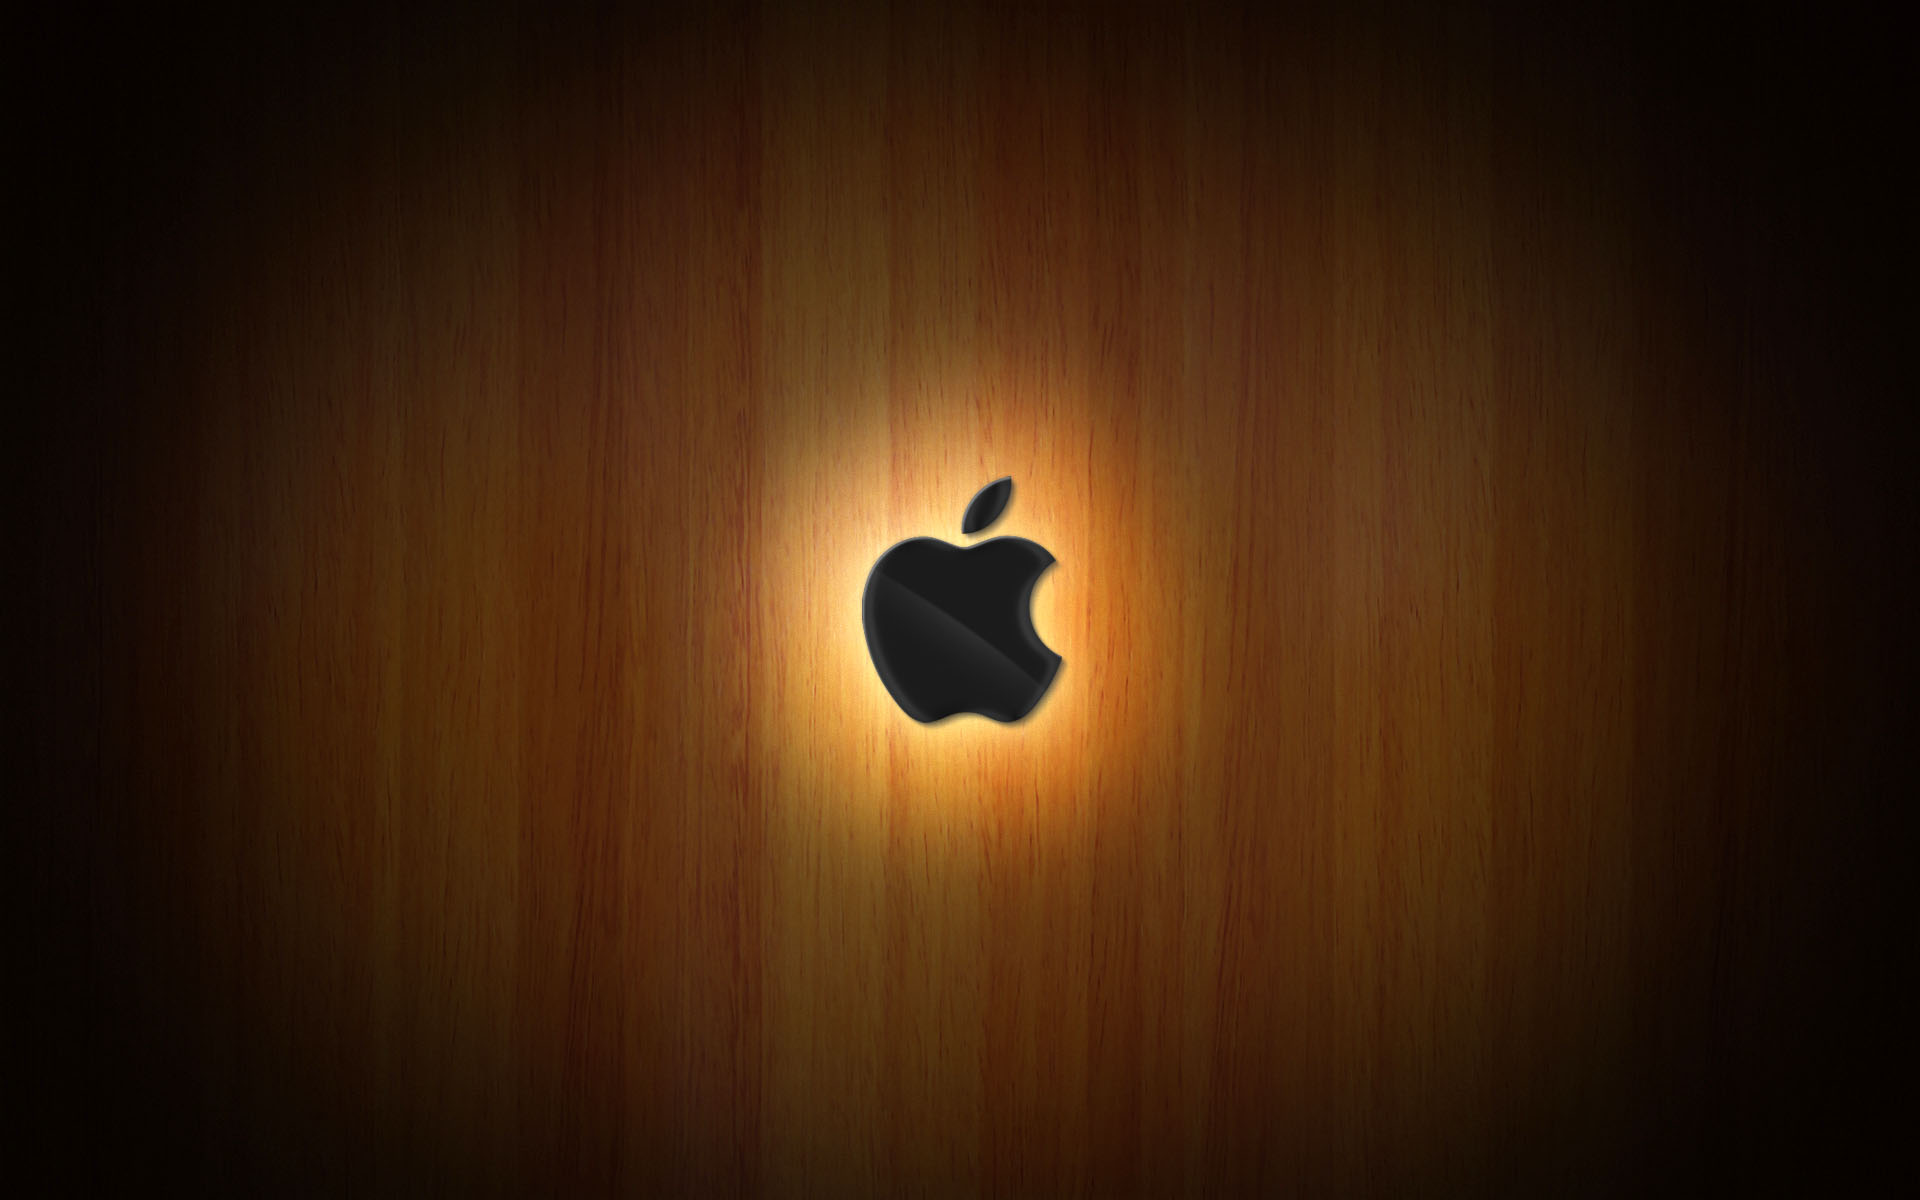 Wooden Glow of Apple229666465 - Wooden Glow of Apple - Wooden, Glow, Creations, Apple